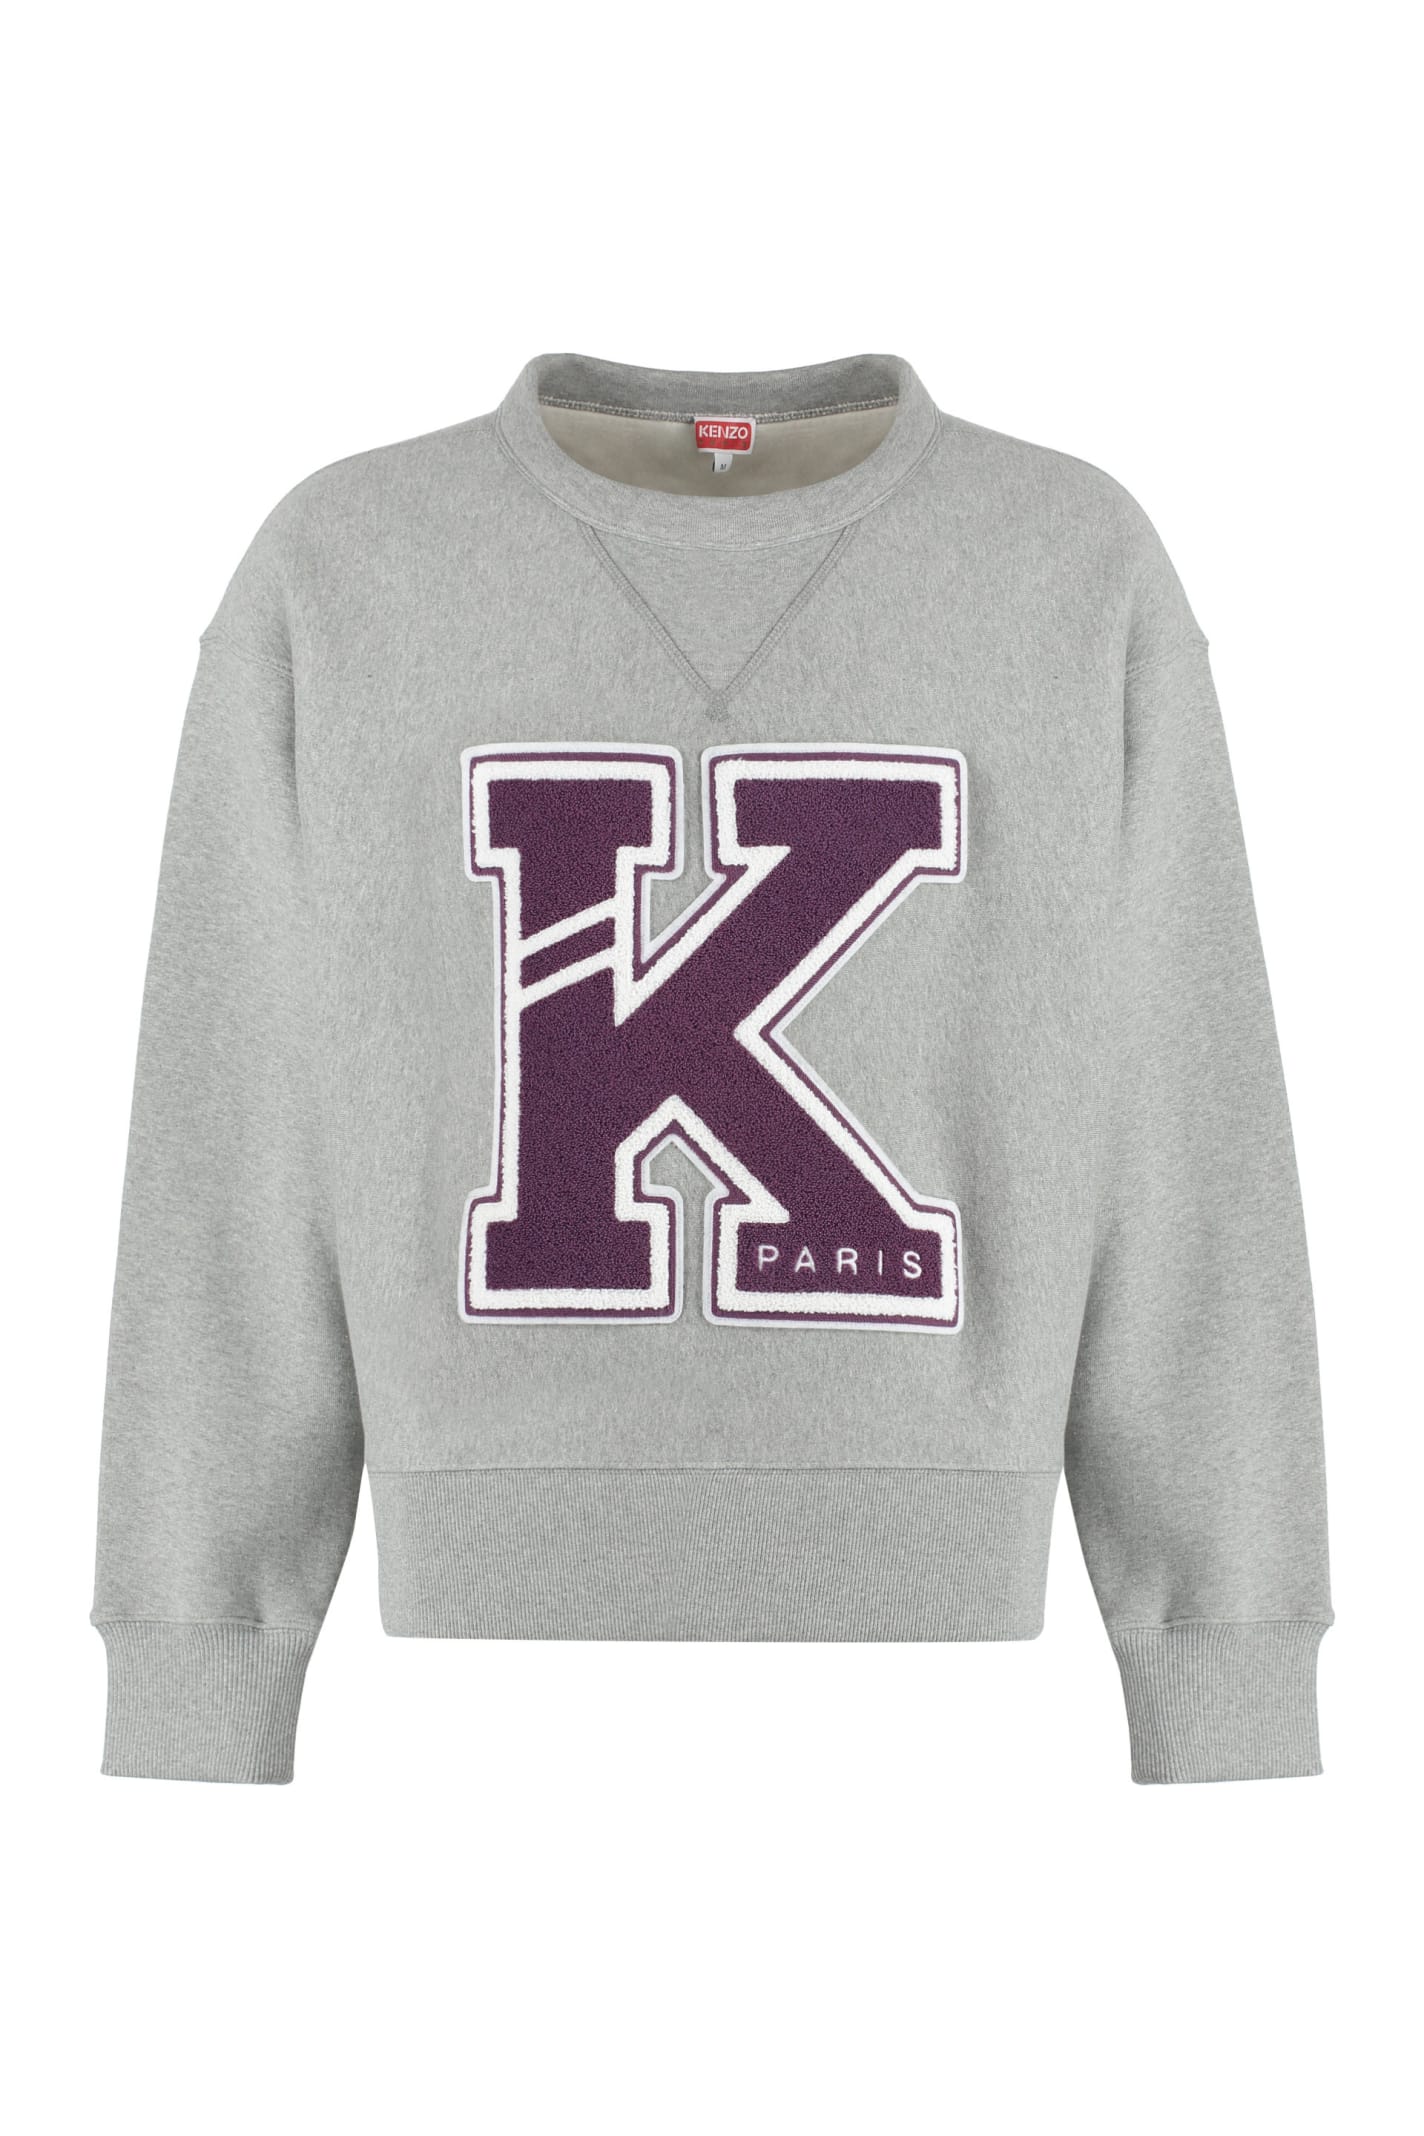 Kenzo Cotton Crew-neck Sweatshirt In Gray